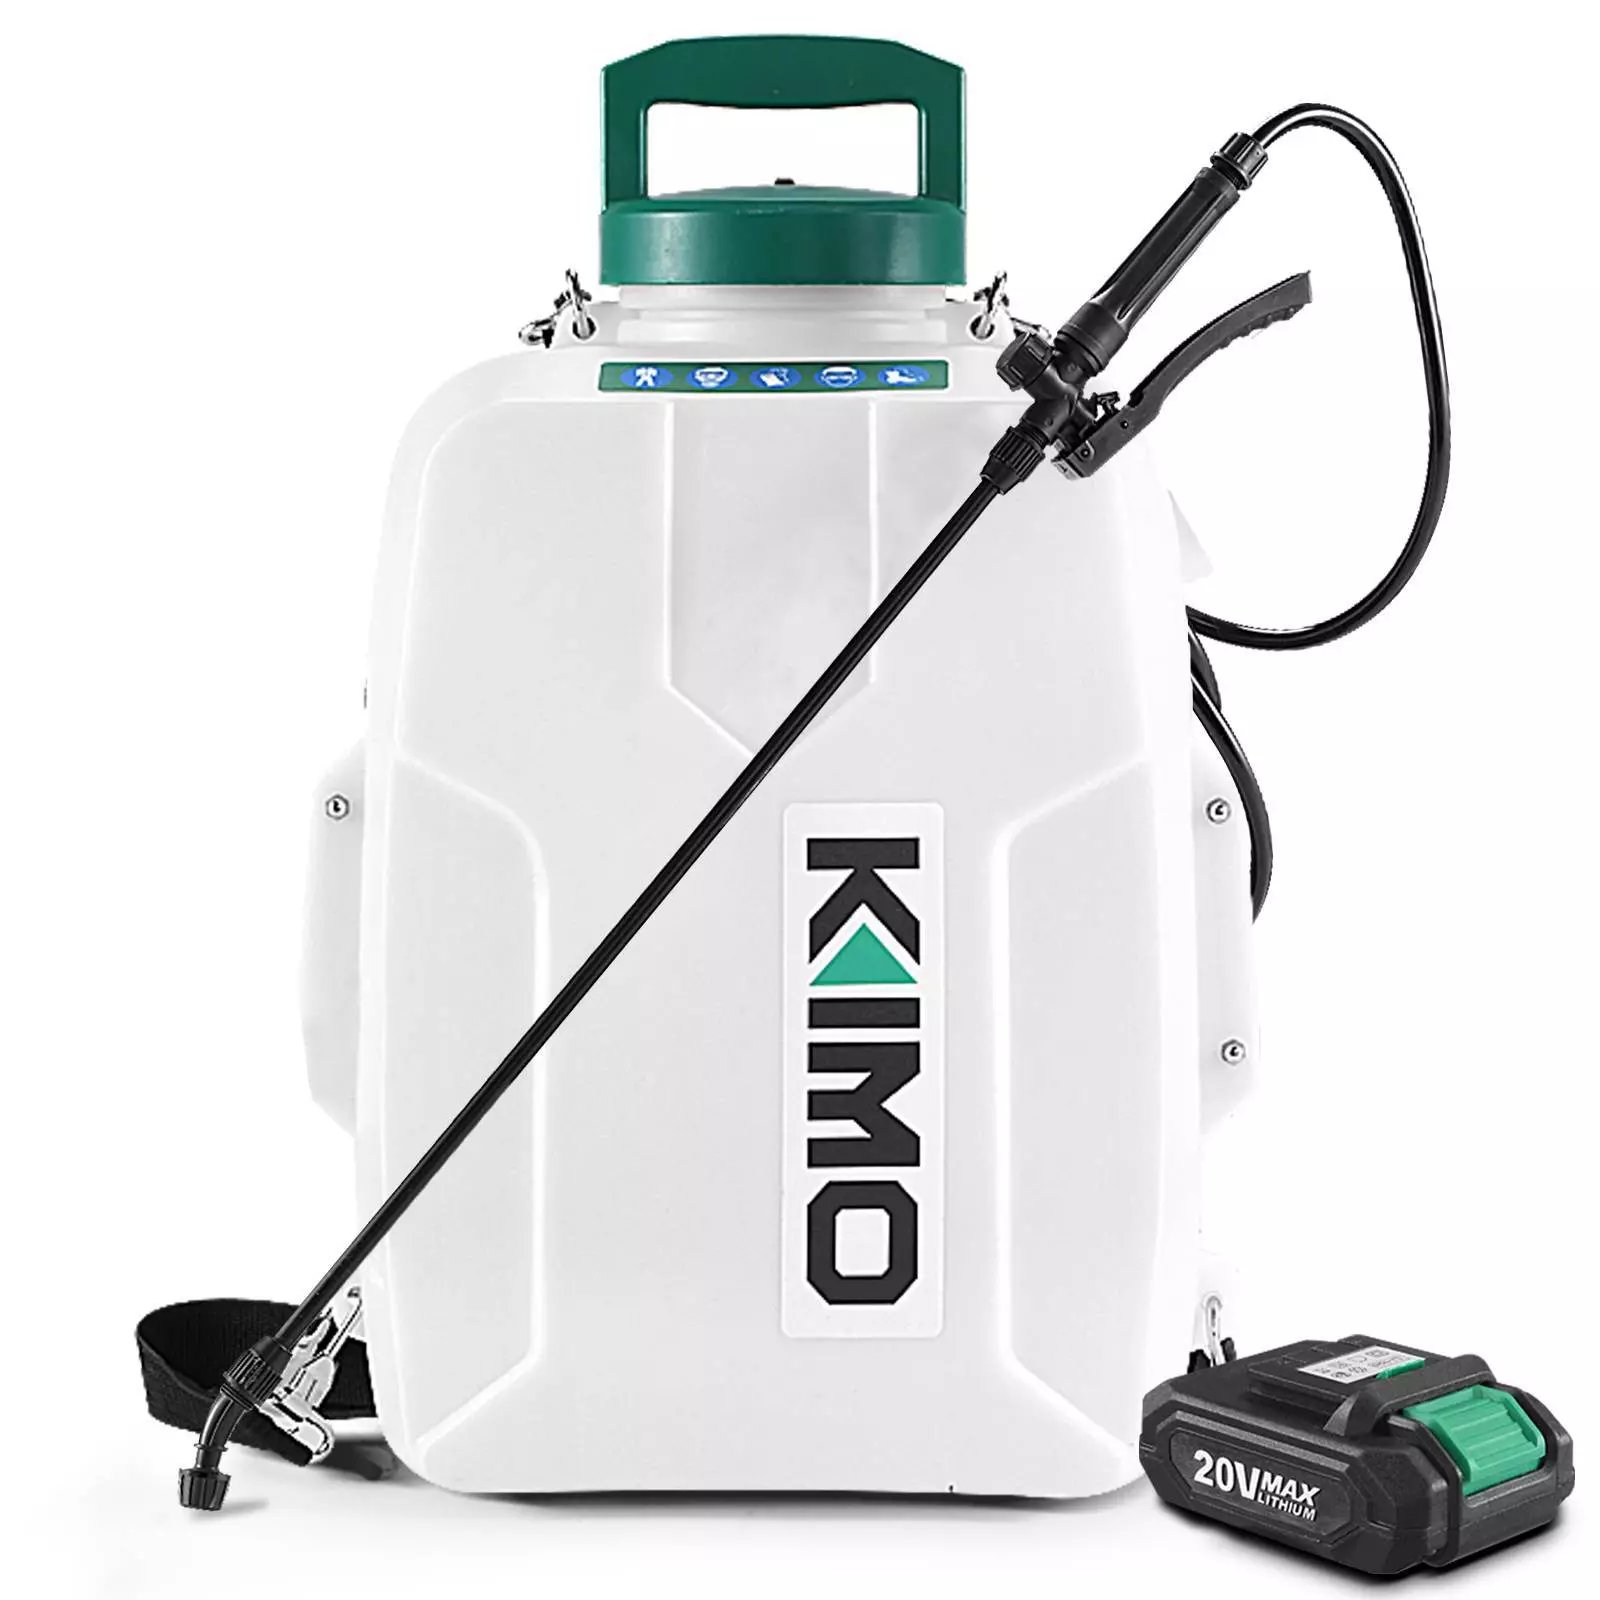 KIMO Battery Powered Backpack Sprayer